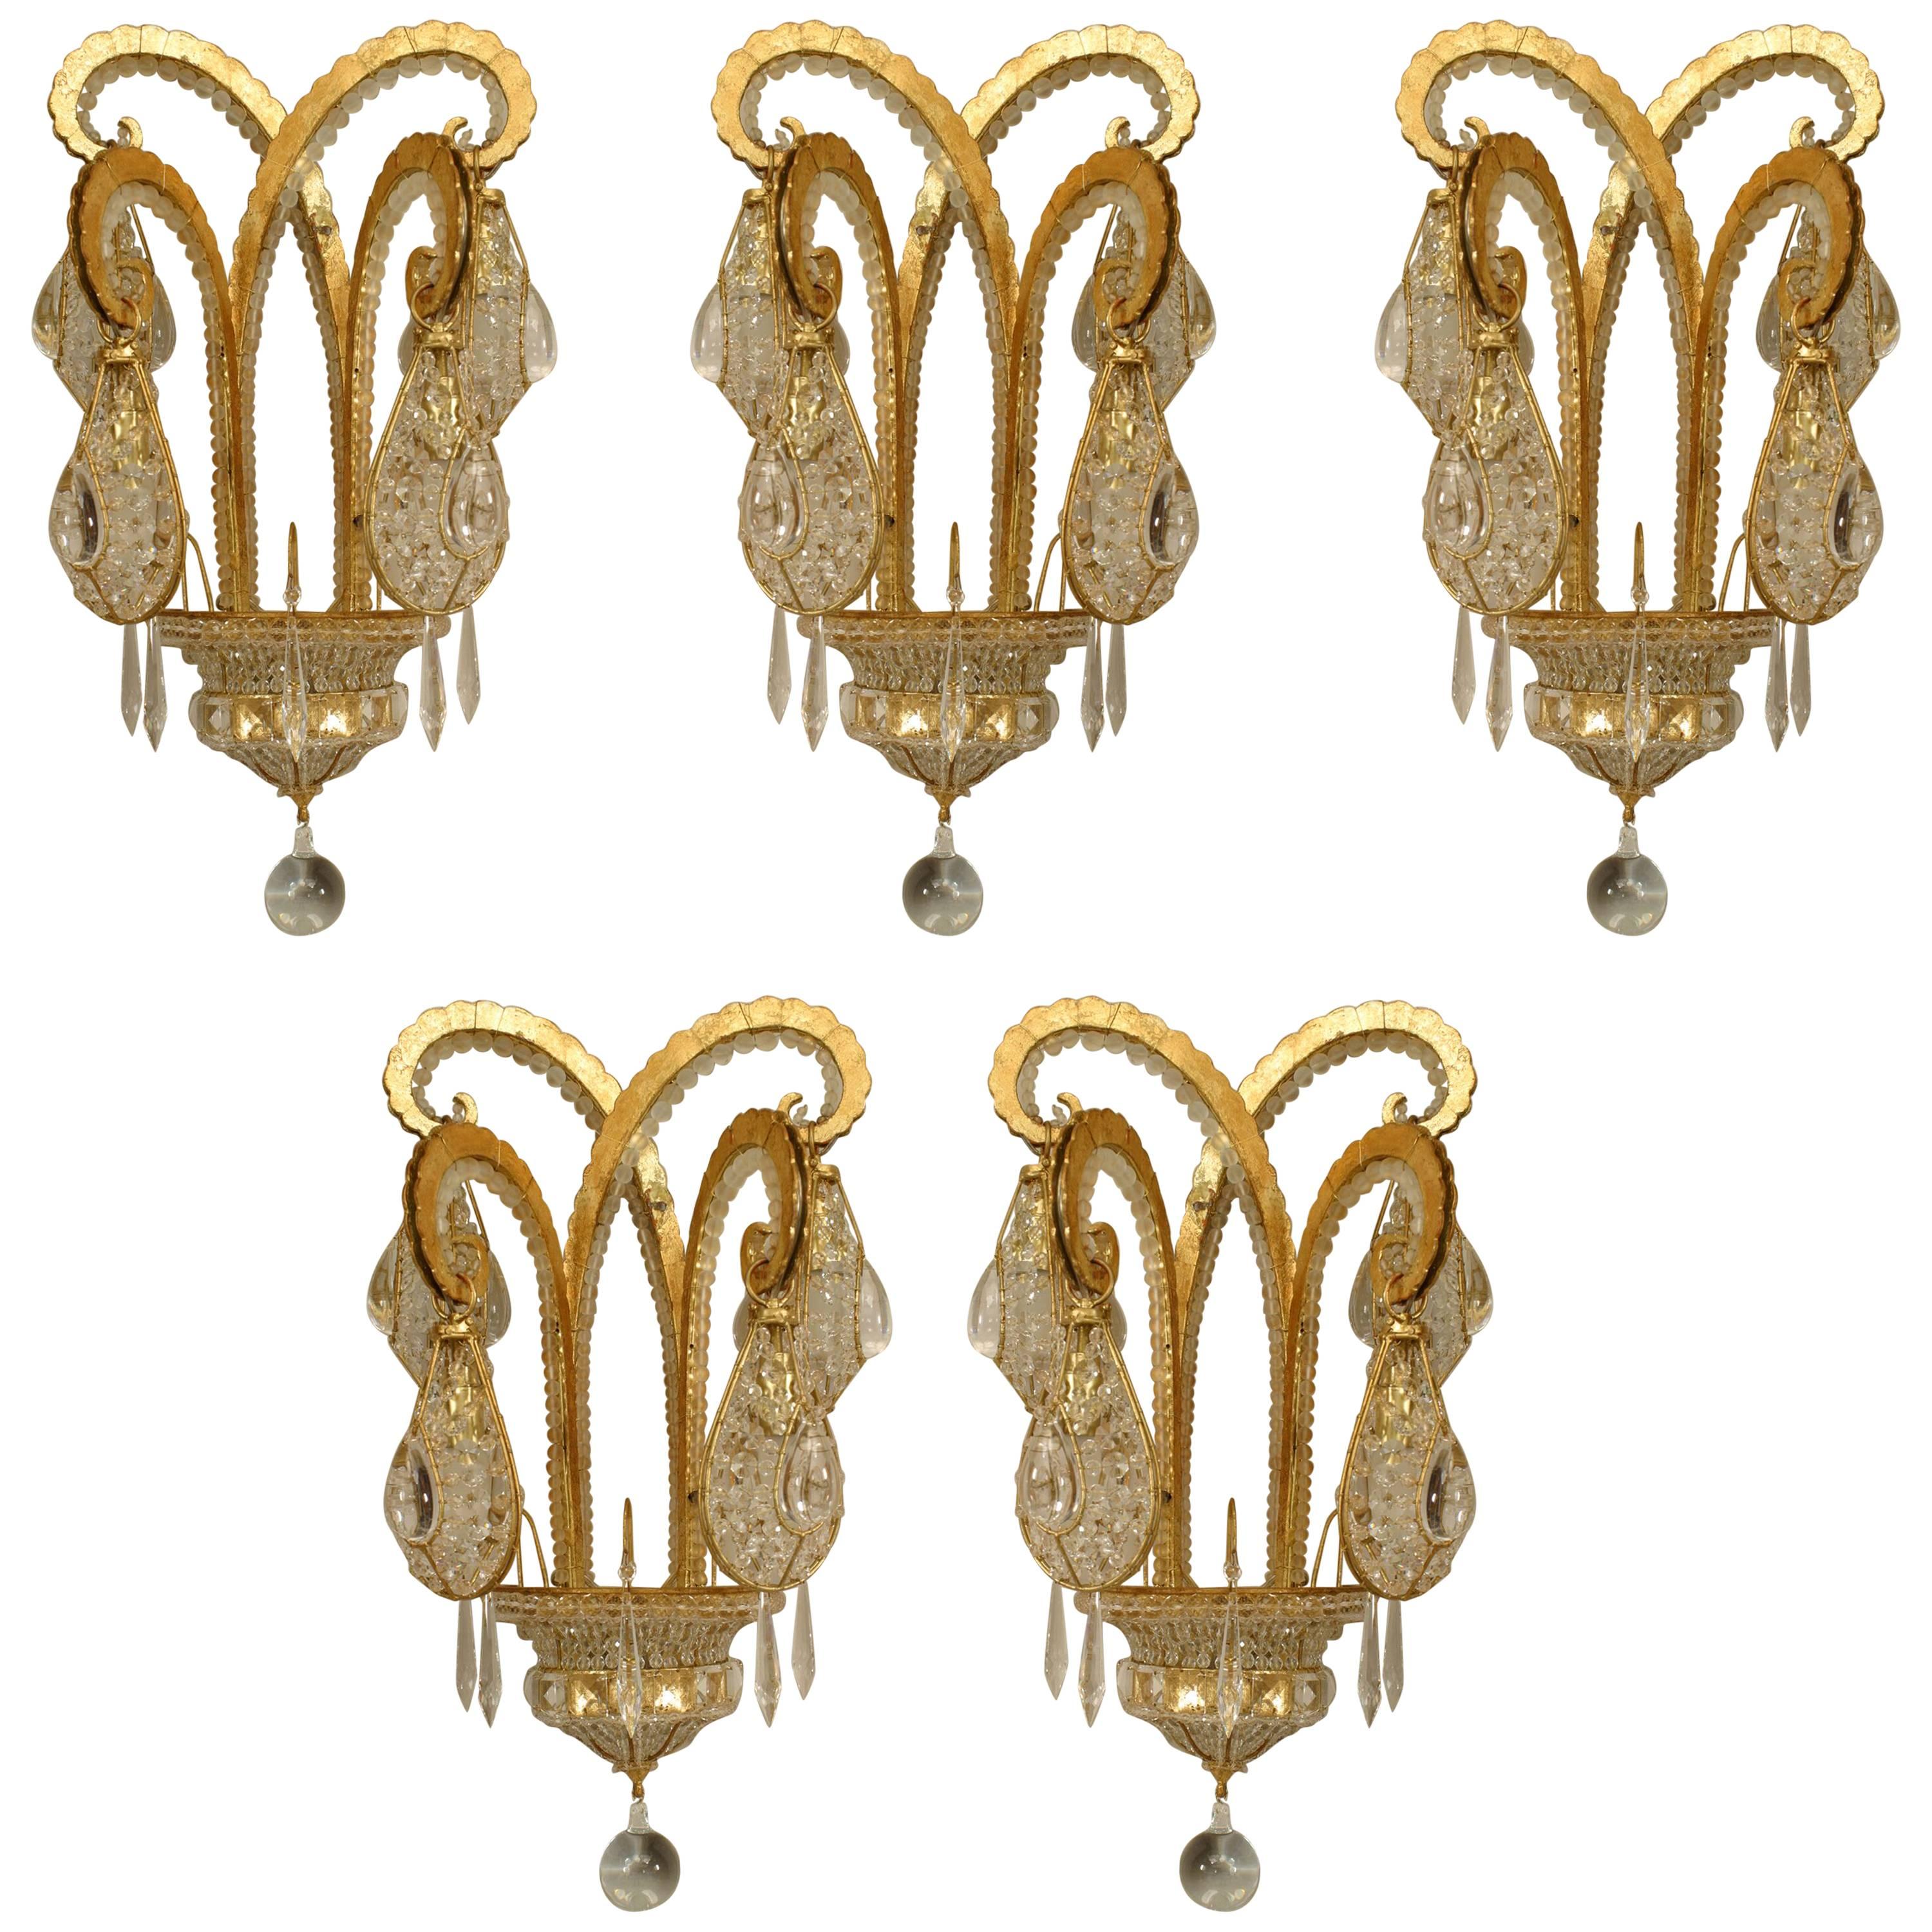 5 Art Deco Gilt Metal & Glass Octopus Wall Sconces in Maison Bagues Manner